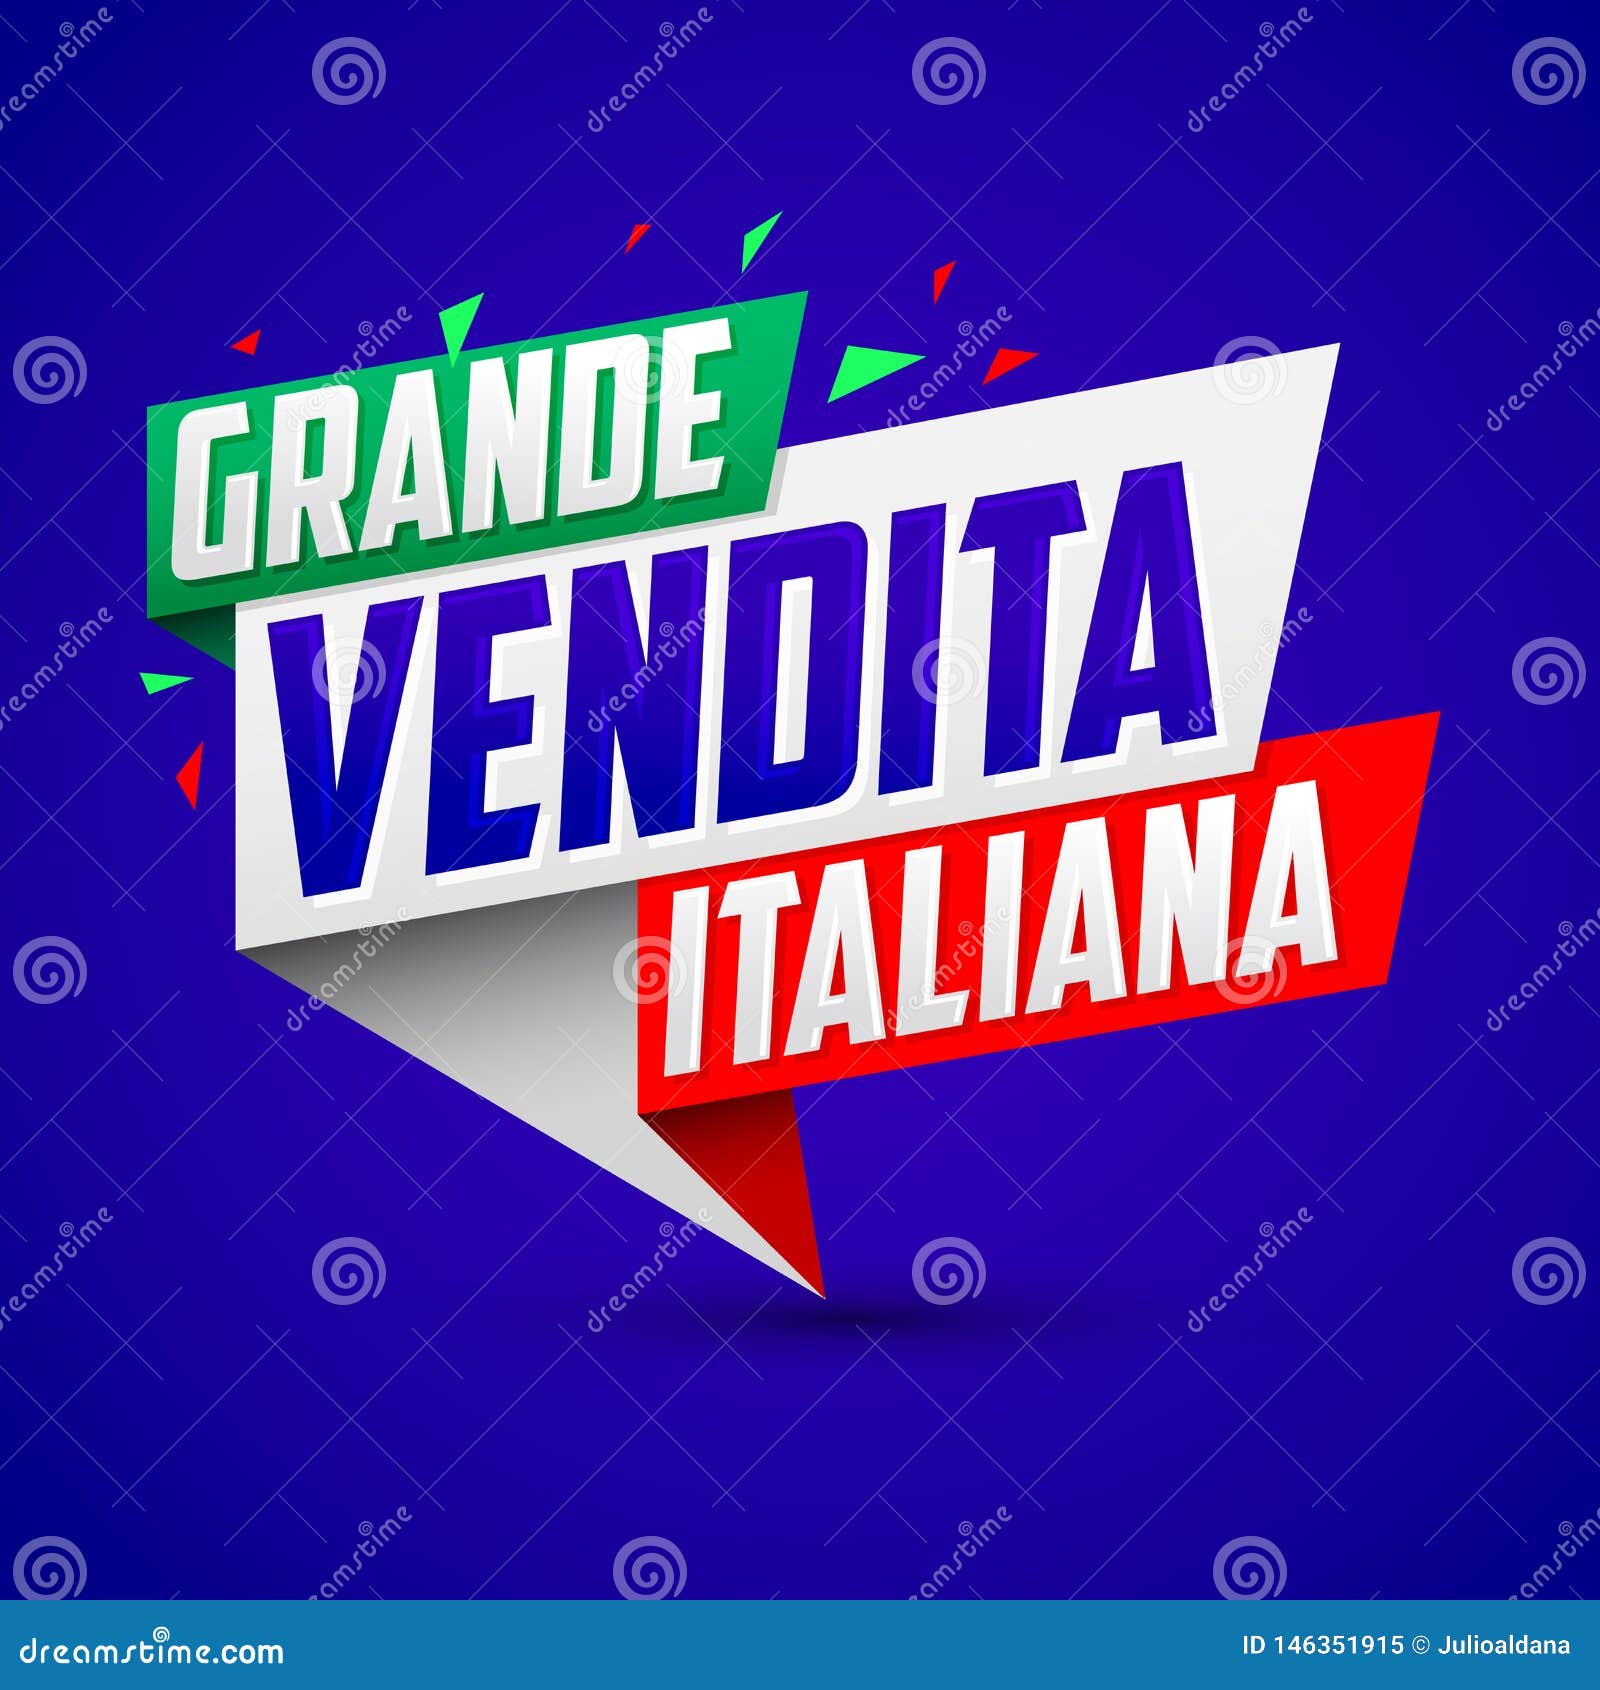 grande vendita italiana, italian big sale text